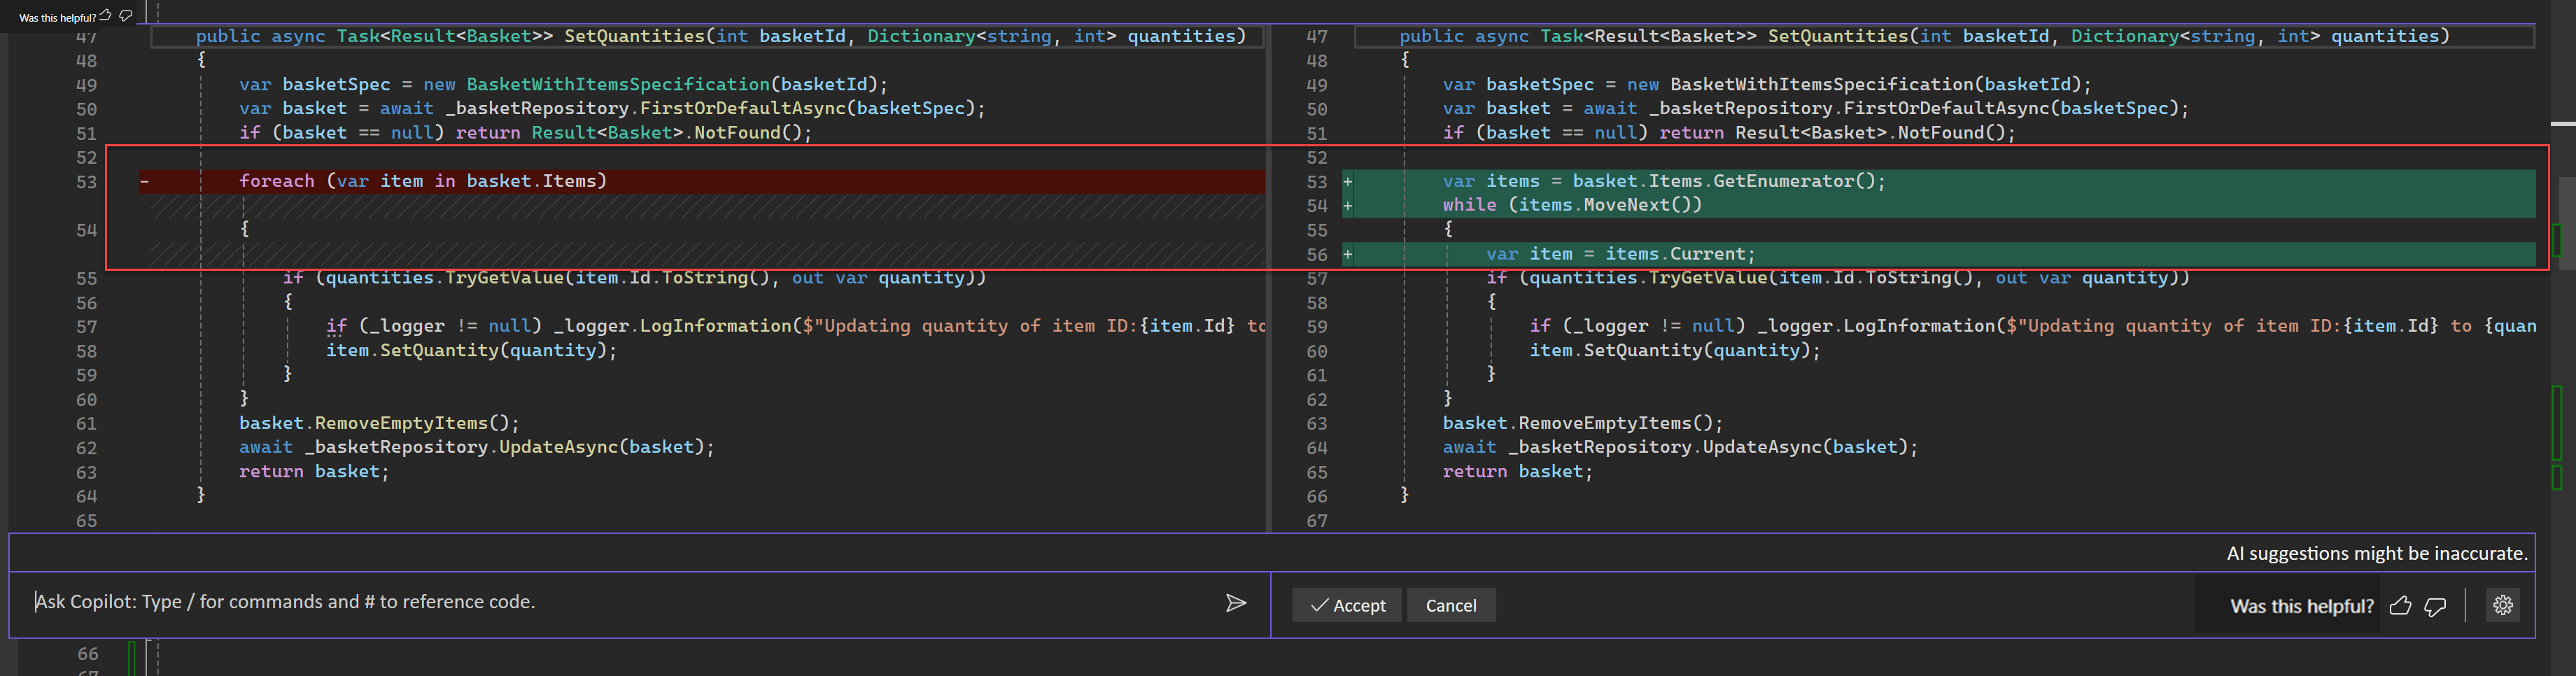 Screenshot of code suggestions in Visual Studio diff view.